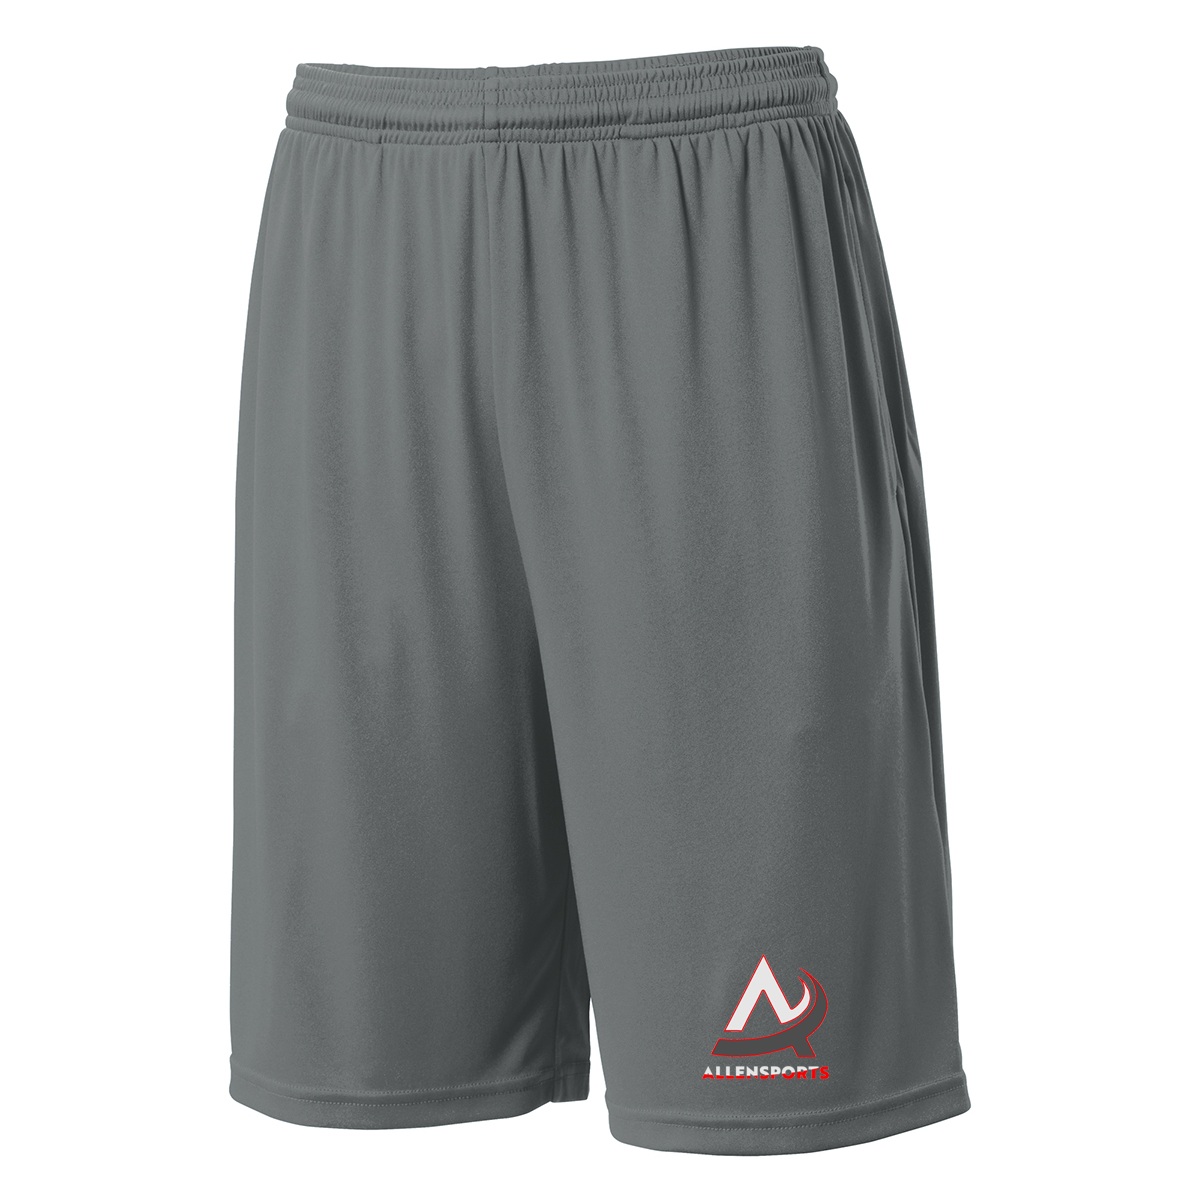 AllenSports Shorts